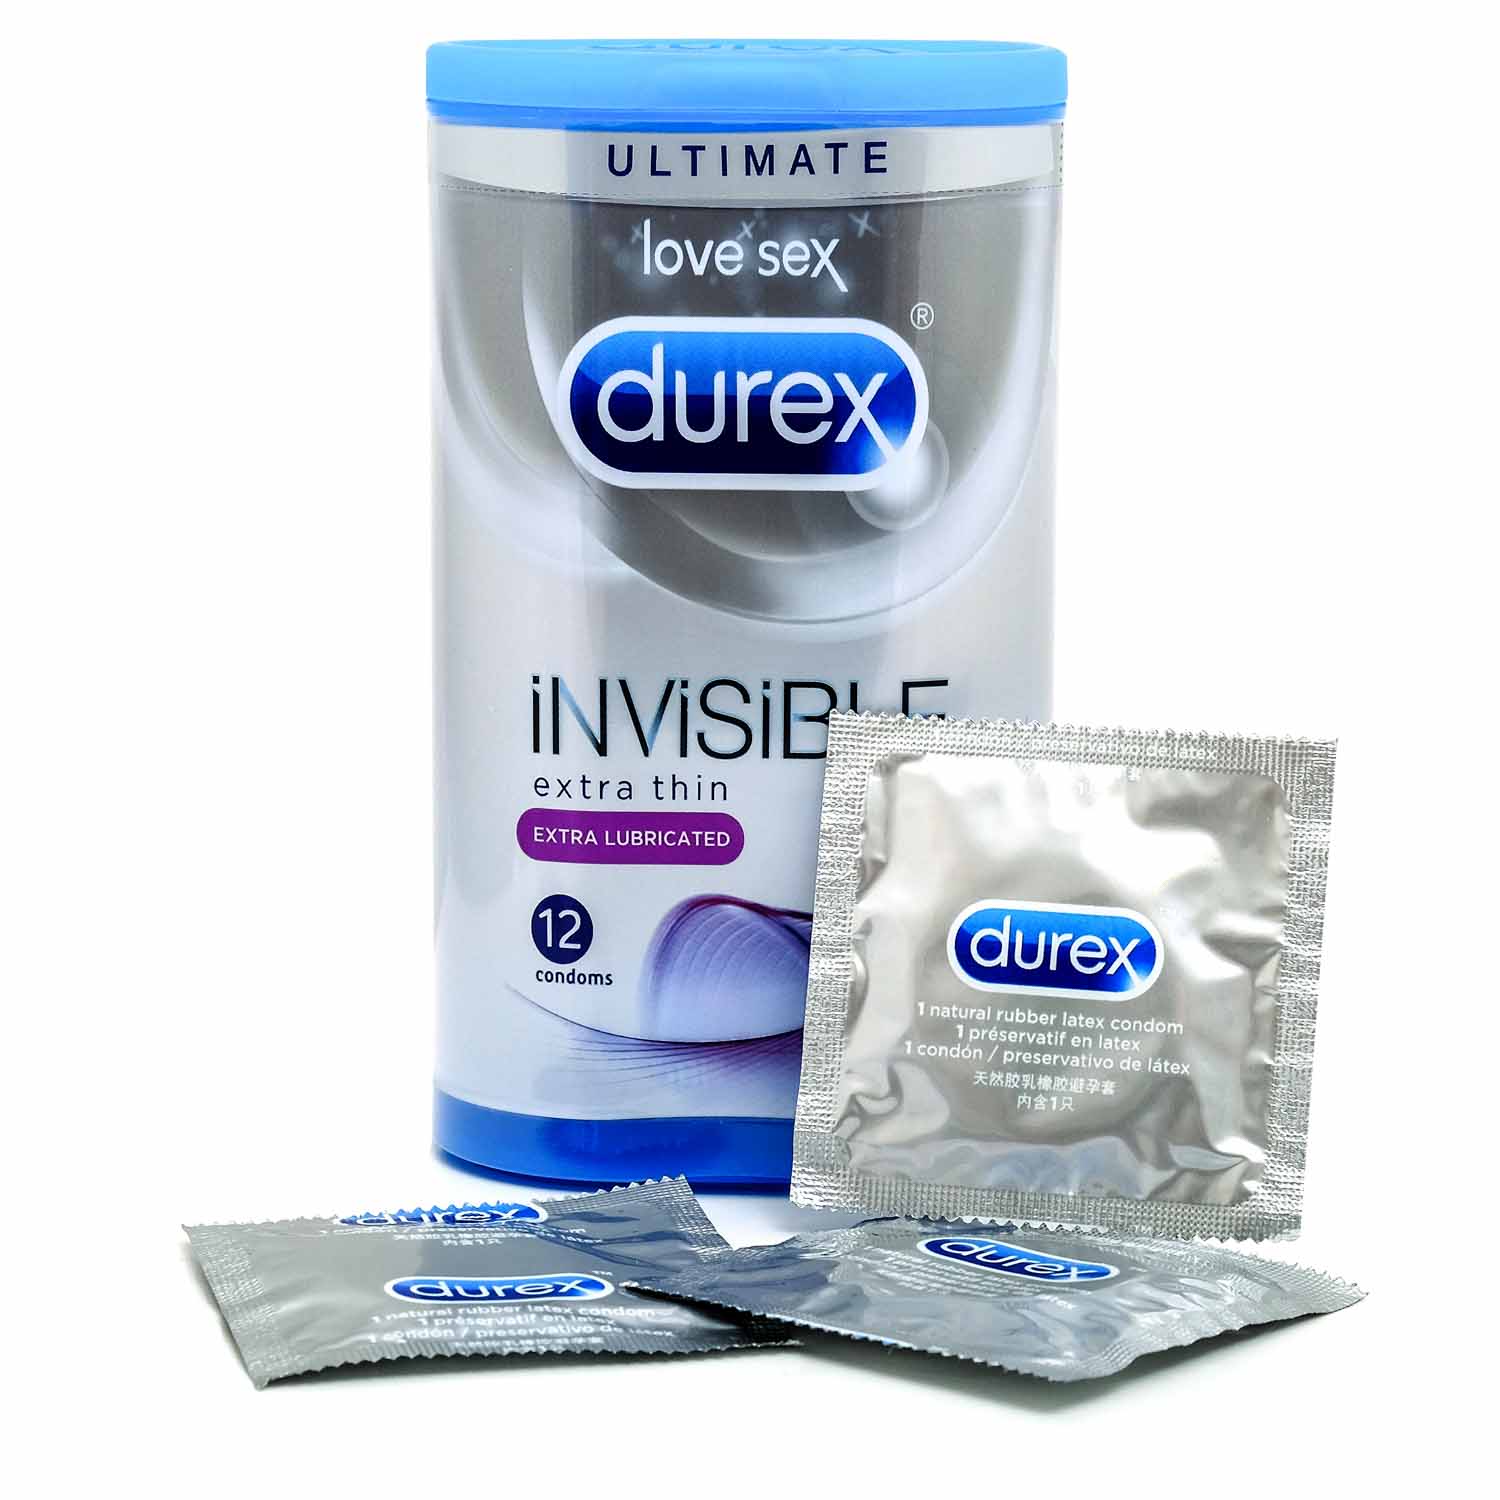 condones invisibles